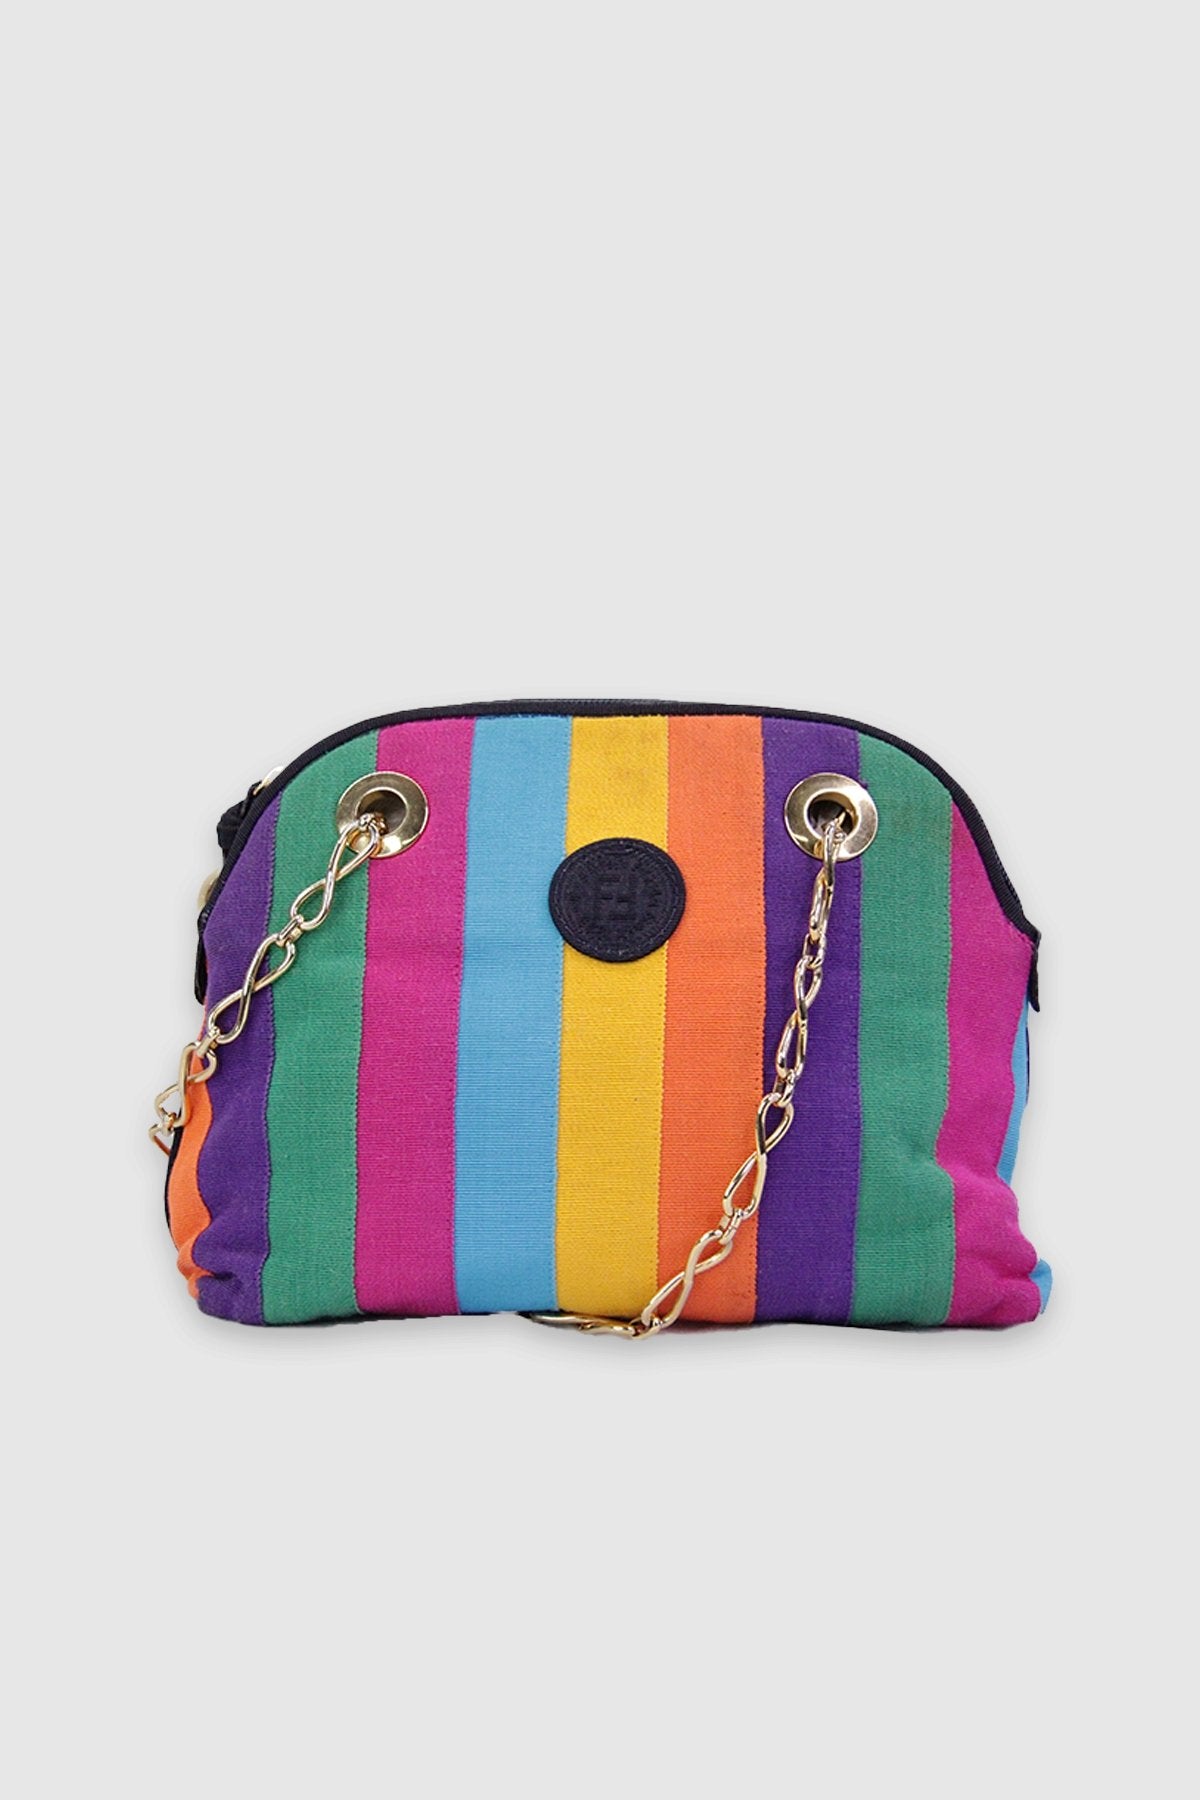 Fendi Multicolored Crossbody Handbag - shop-olivia.com